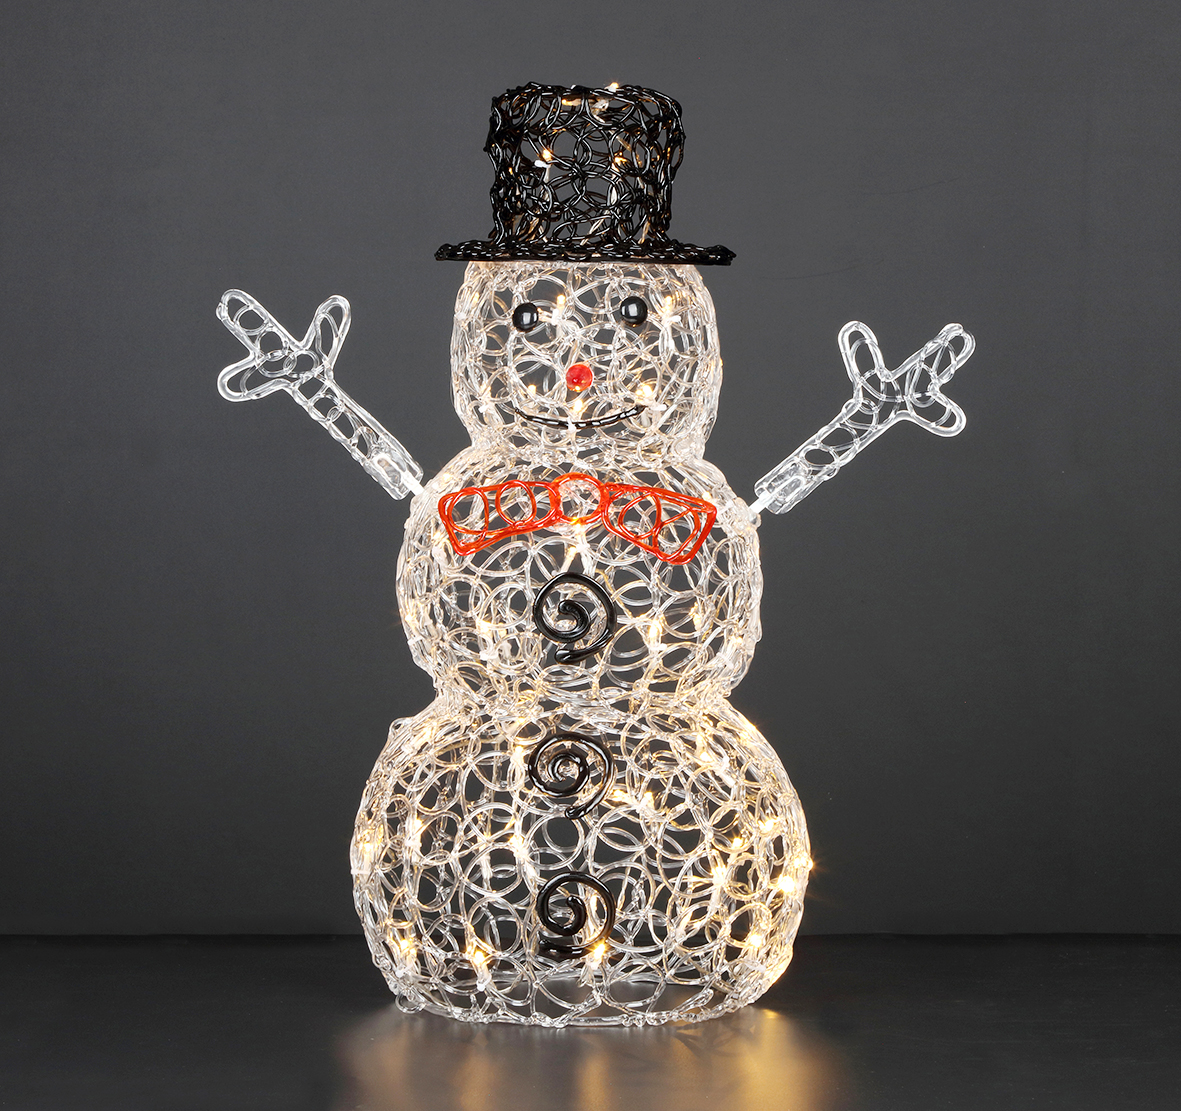 LED Snowman Christmas Figure